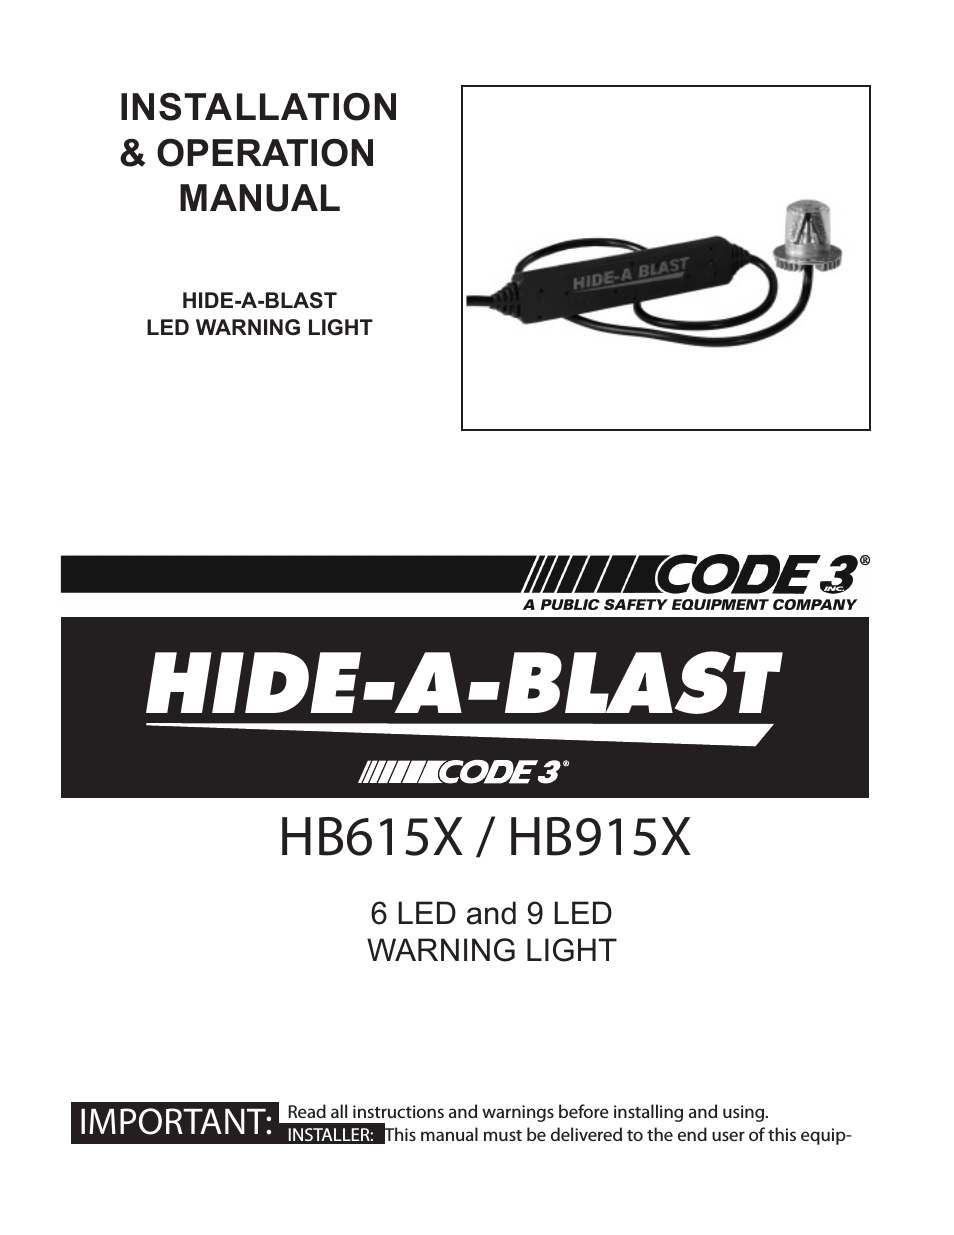 LED Hide-A-Blast